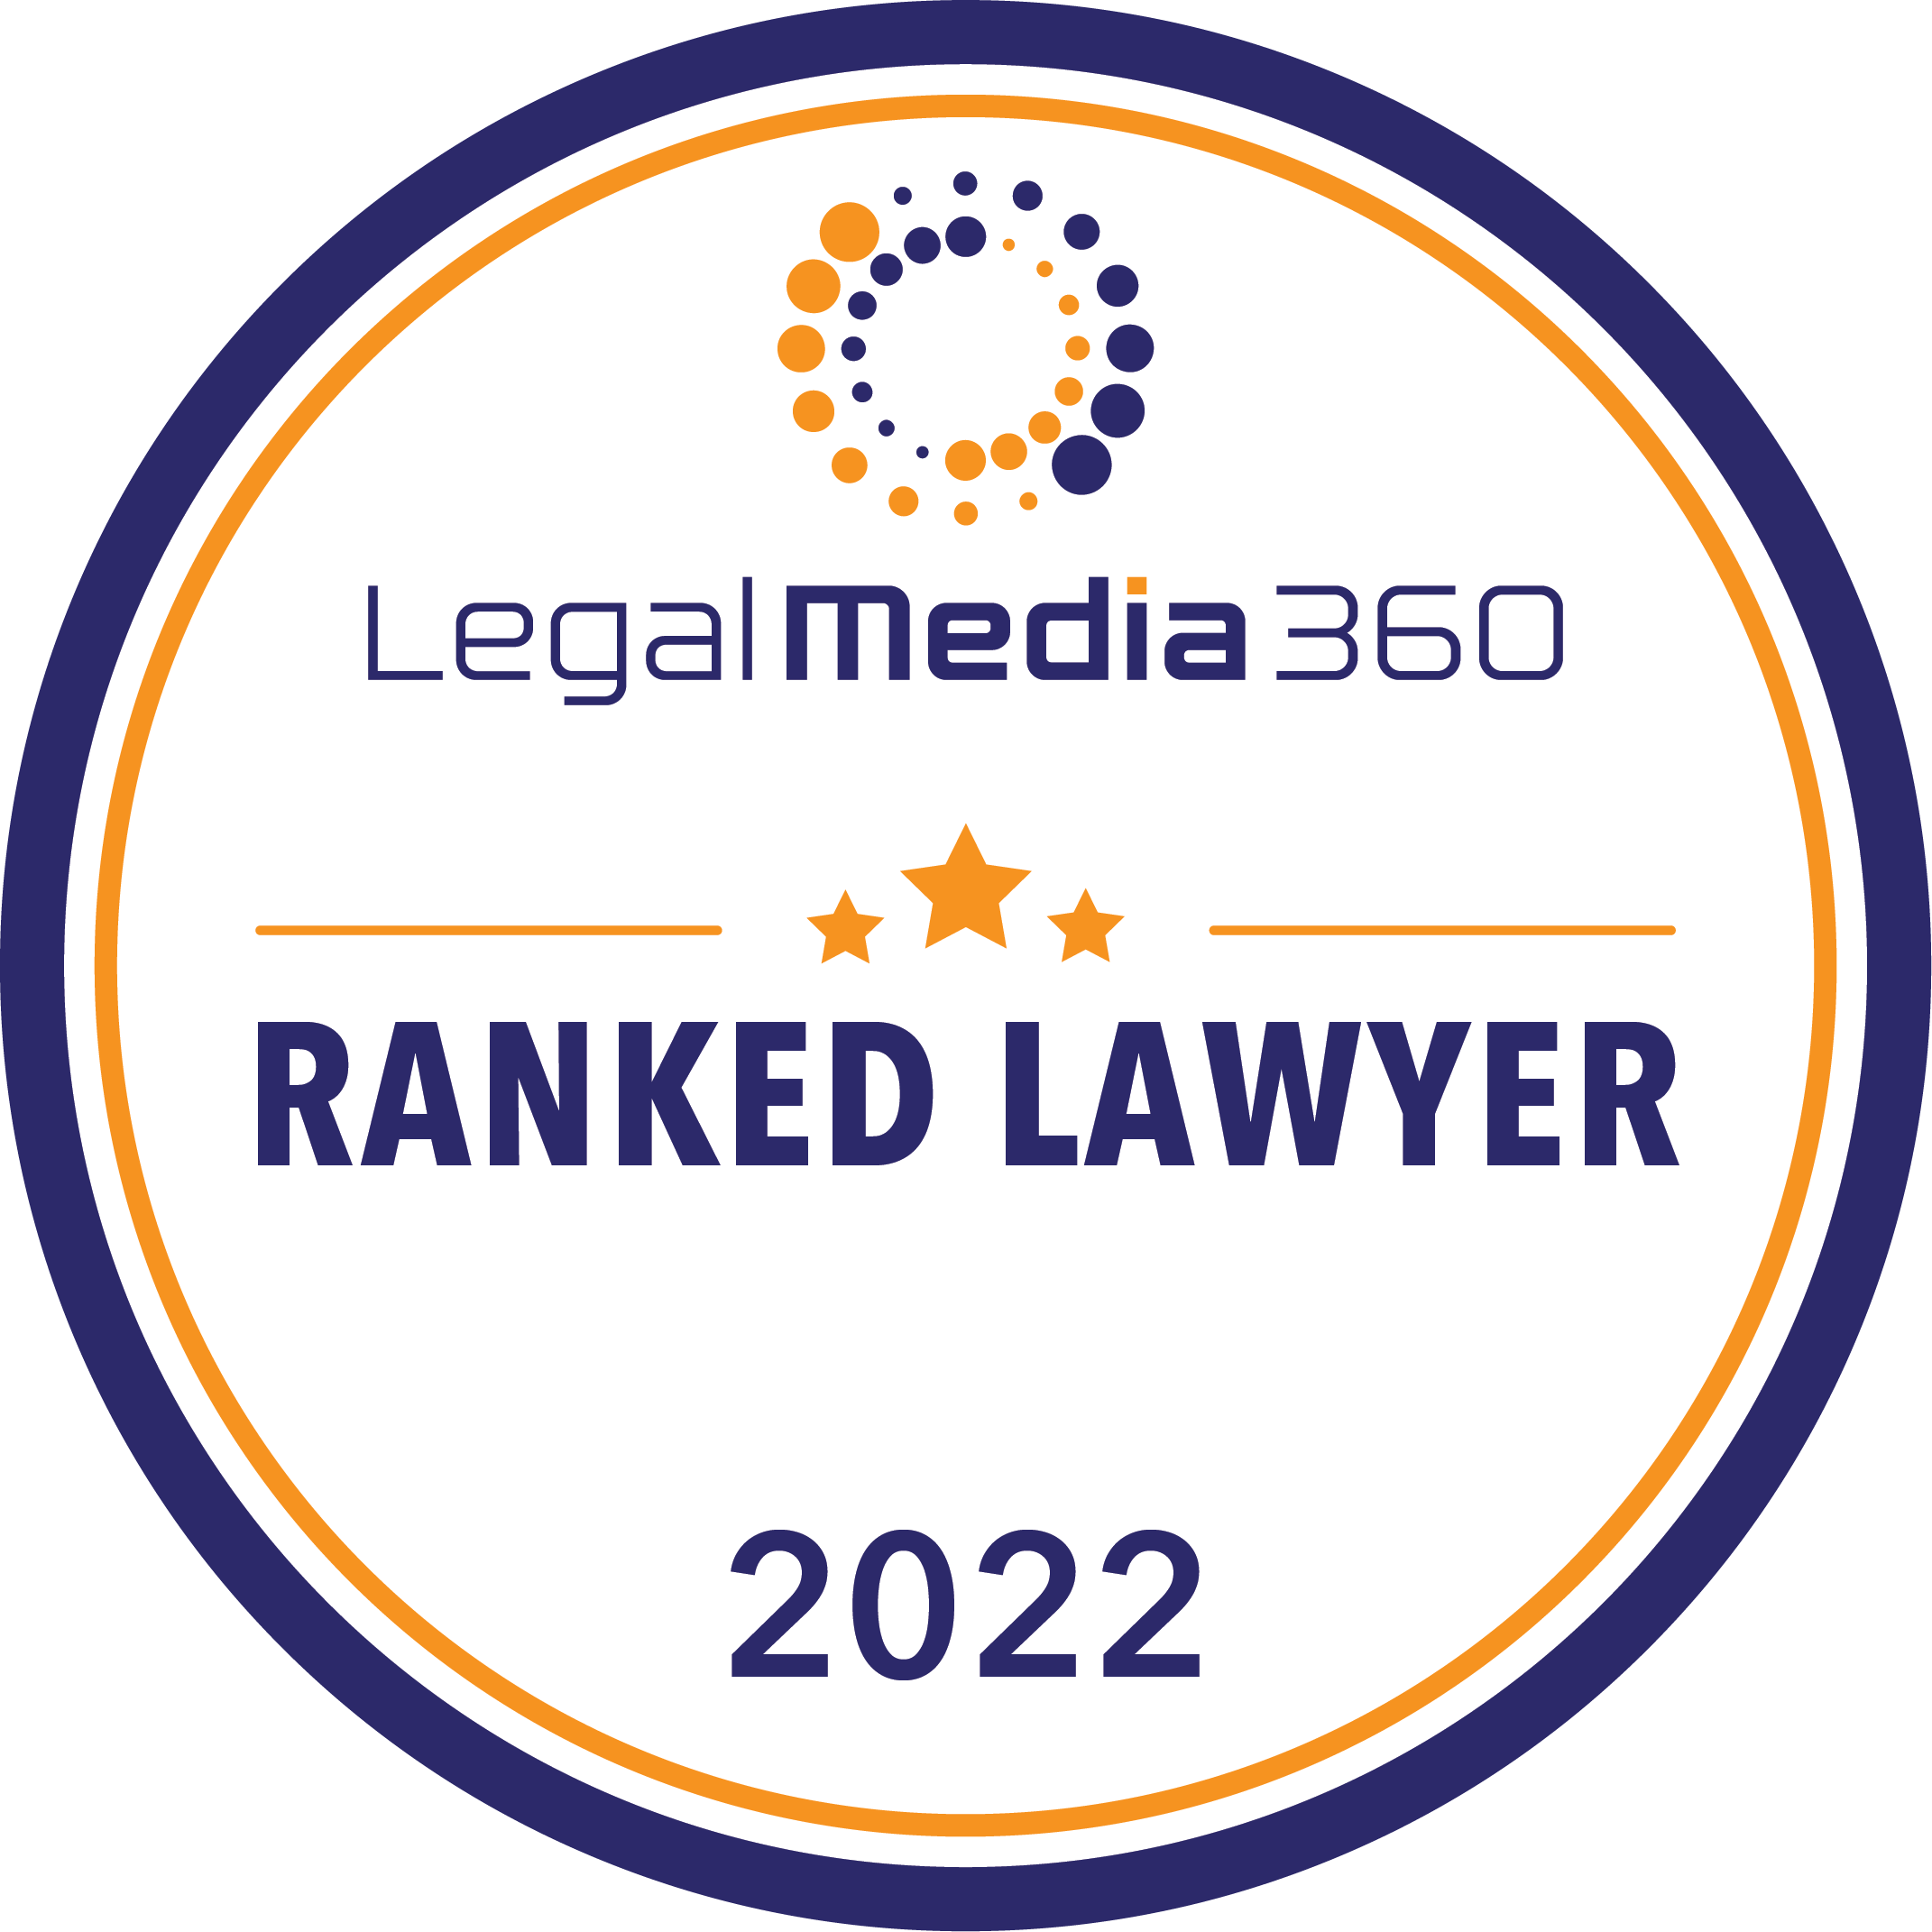 Legal Media 360 Ranked Lawyer Logo 2022